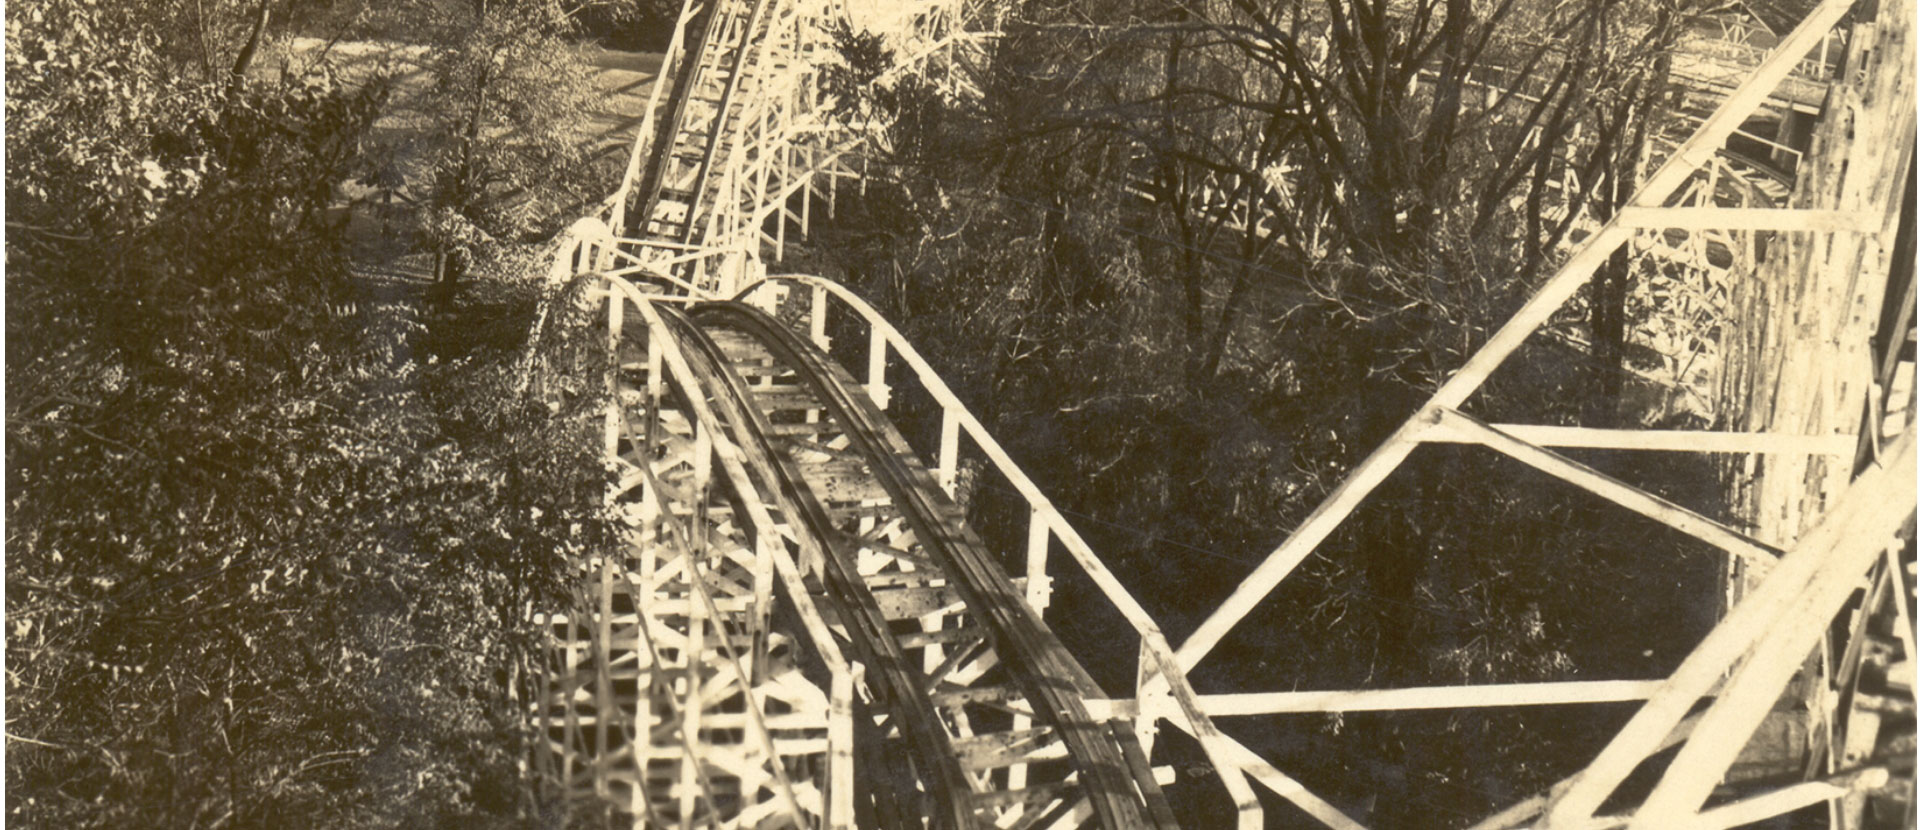 Wildcat rolling hills circa 1935